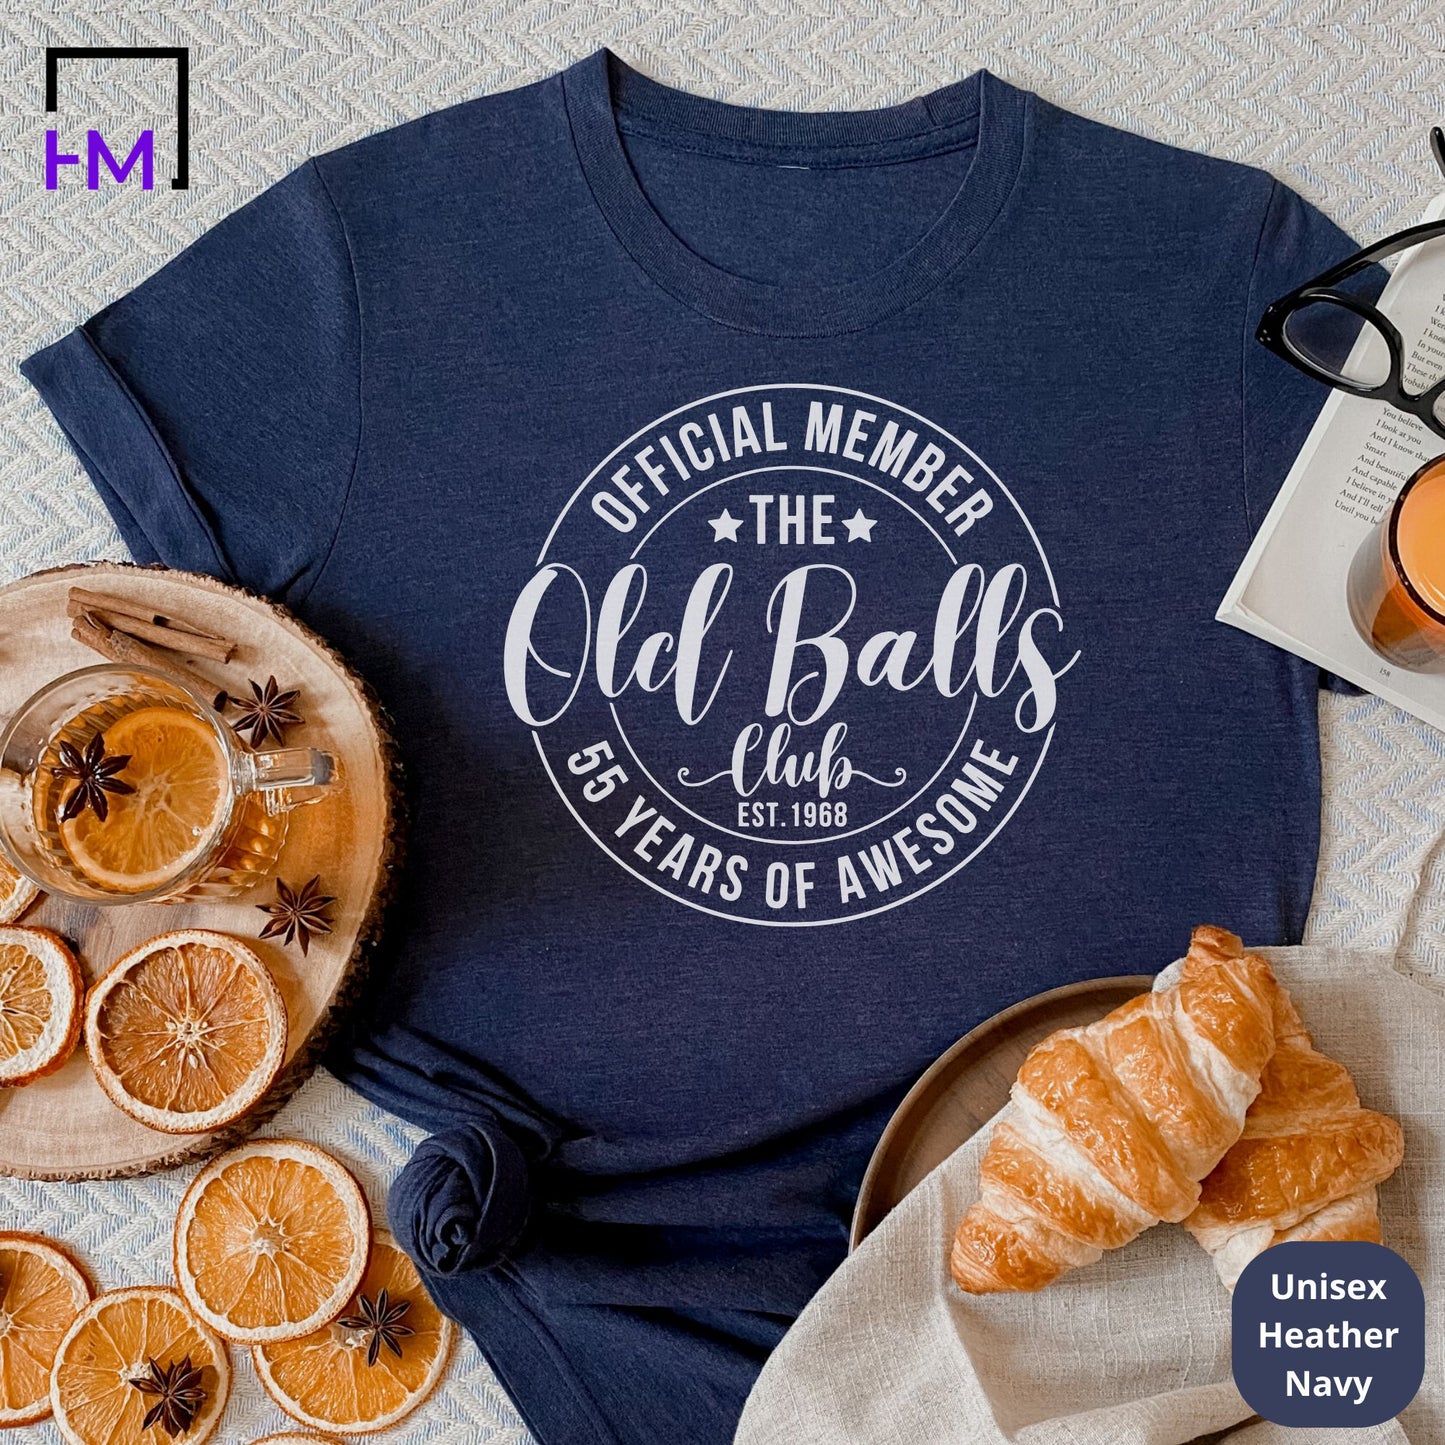 Old Balls Club - Funny 50th Birthday Shirt for Men